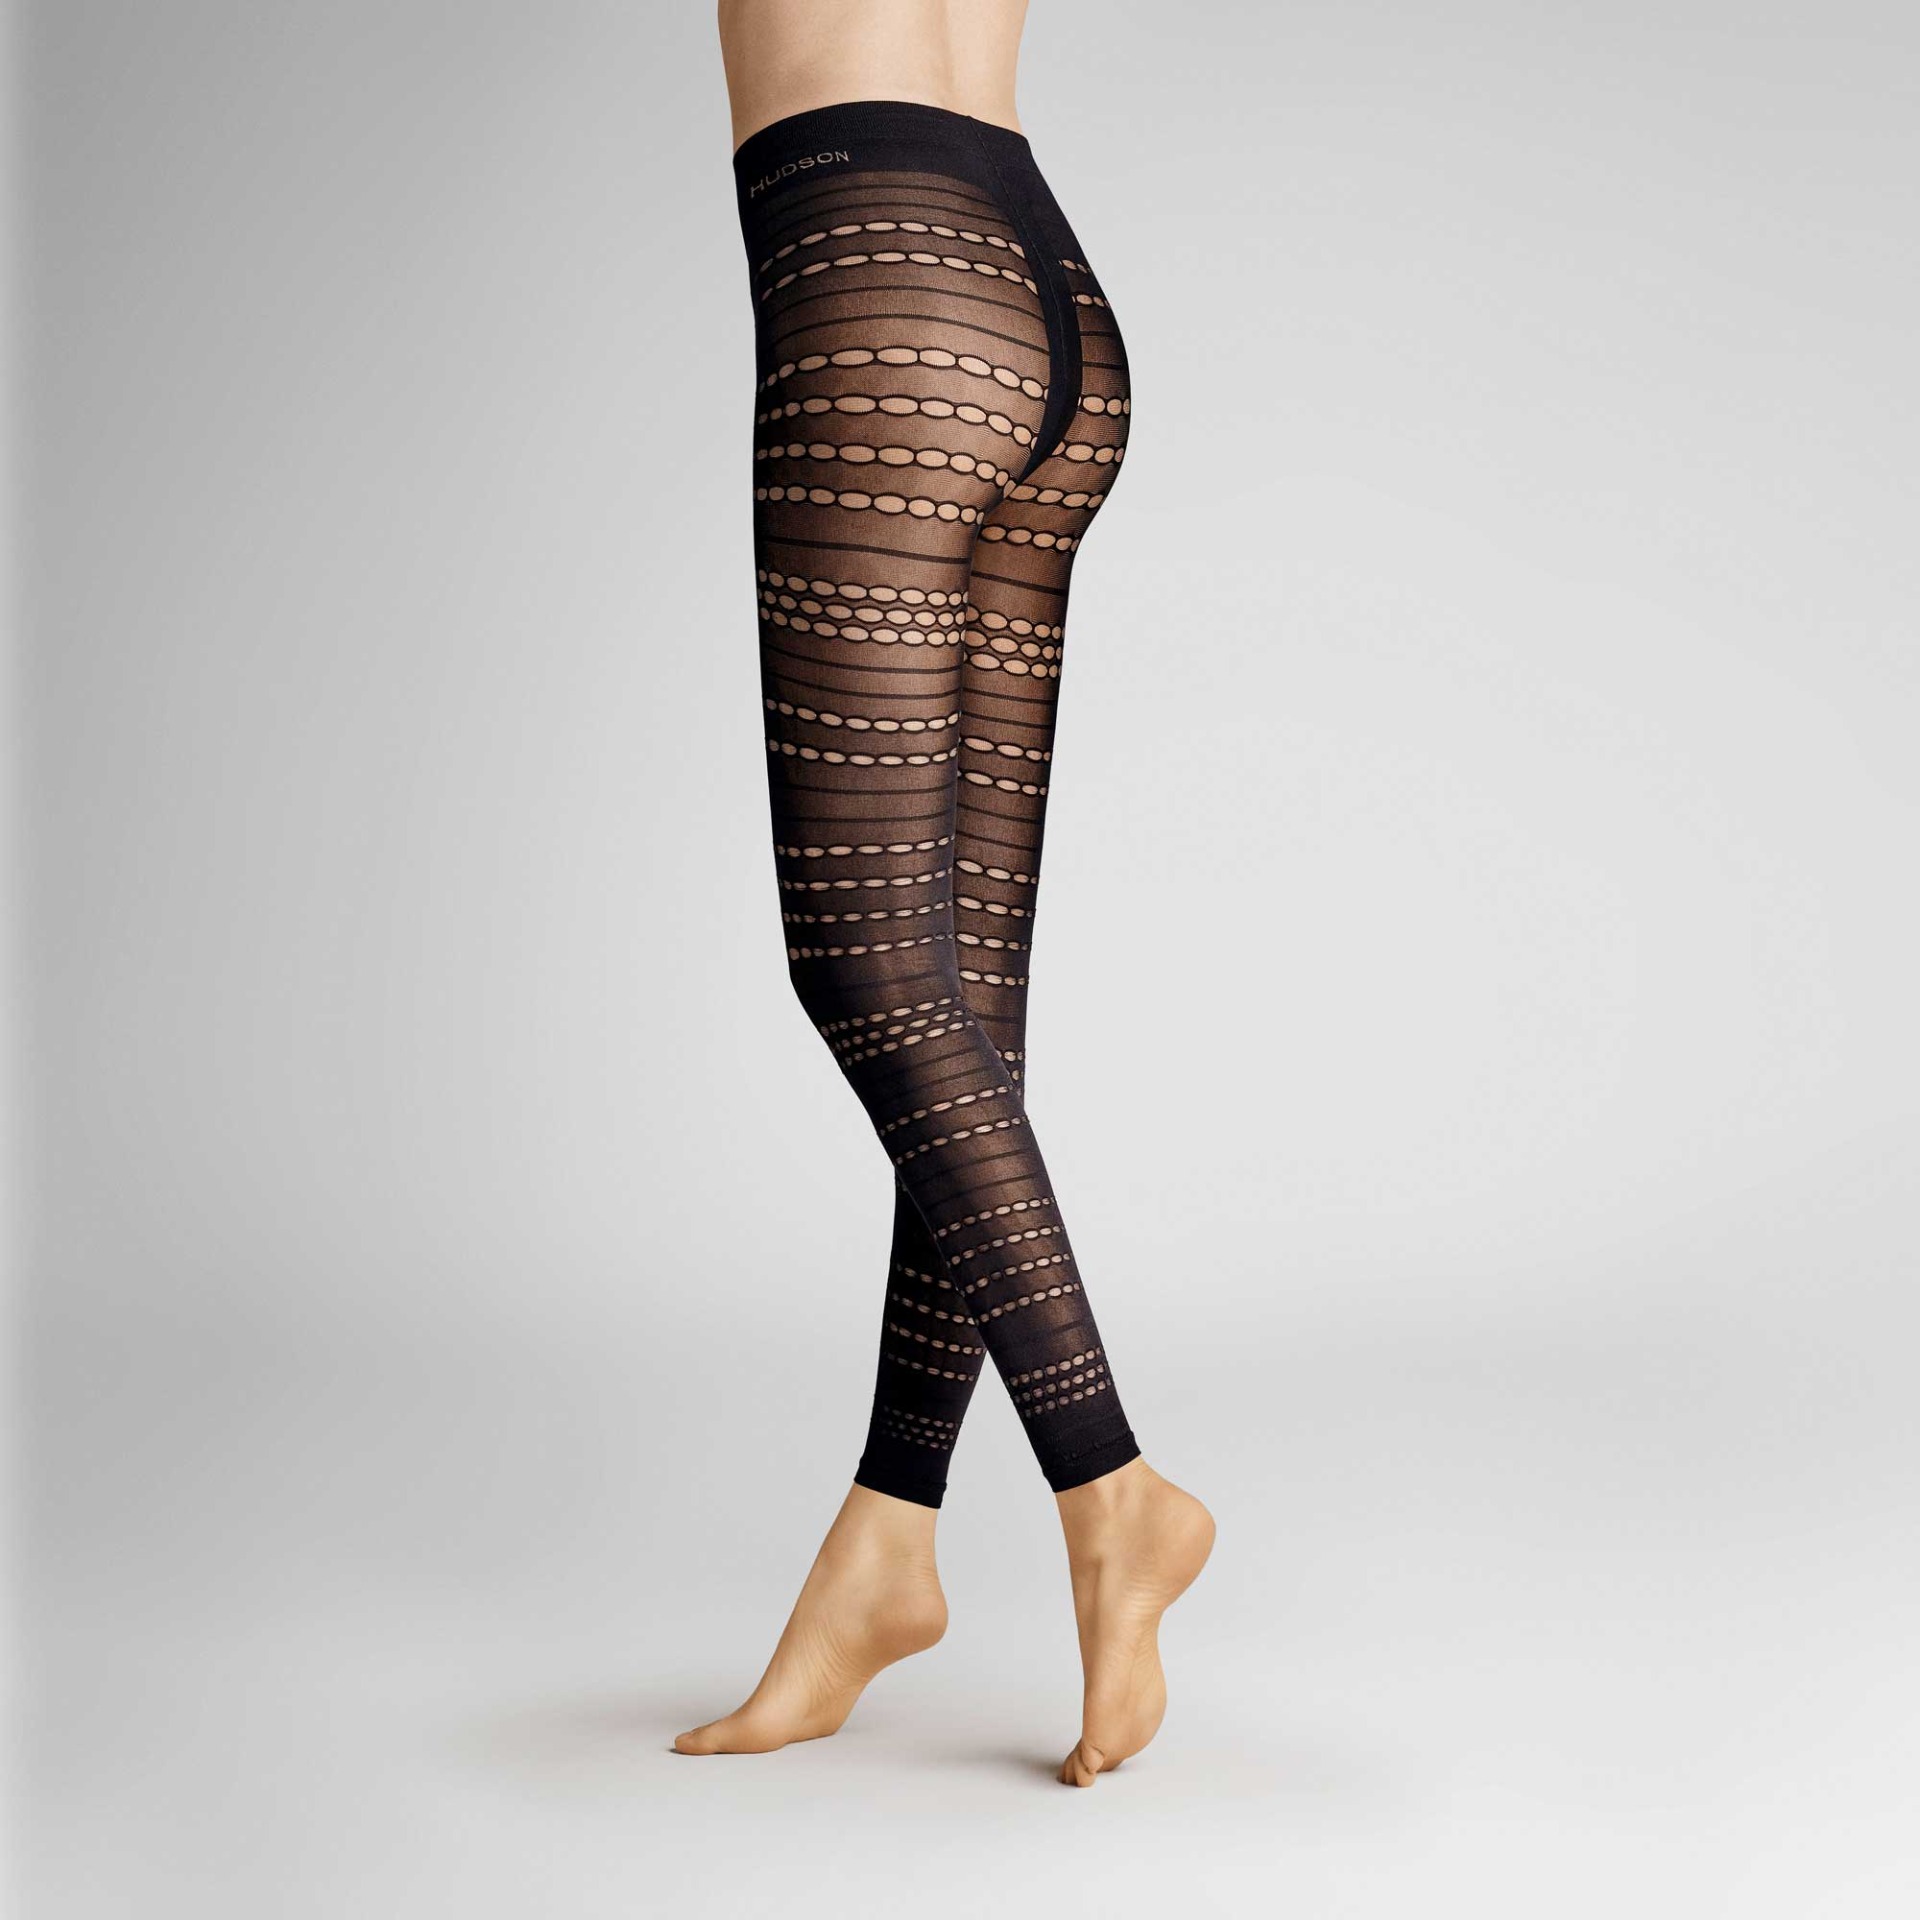 HUDSON Damen FUZZY -  36/38 - Damen Leggings mit transparenter Musterung - Black (Schwarz)